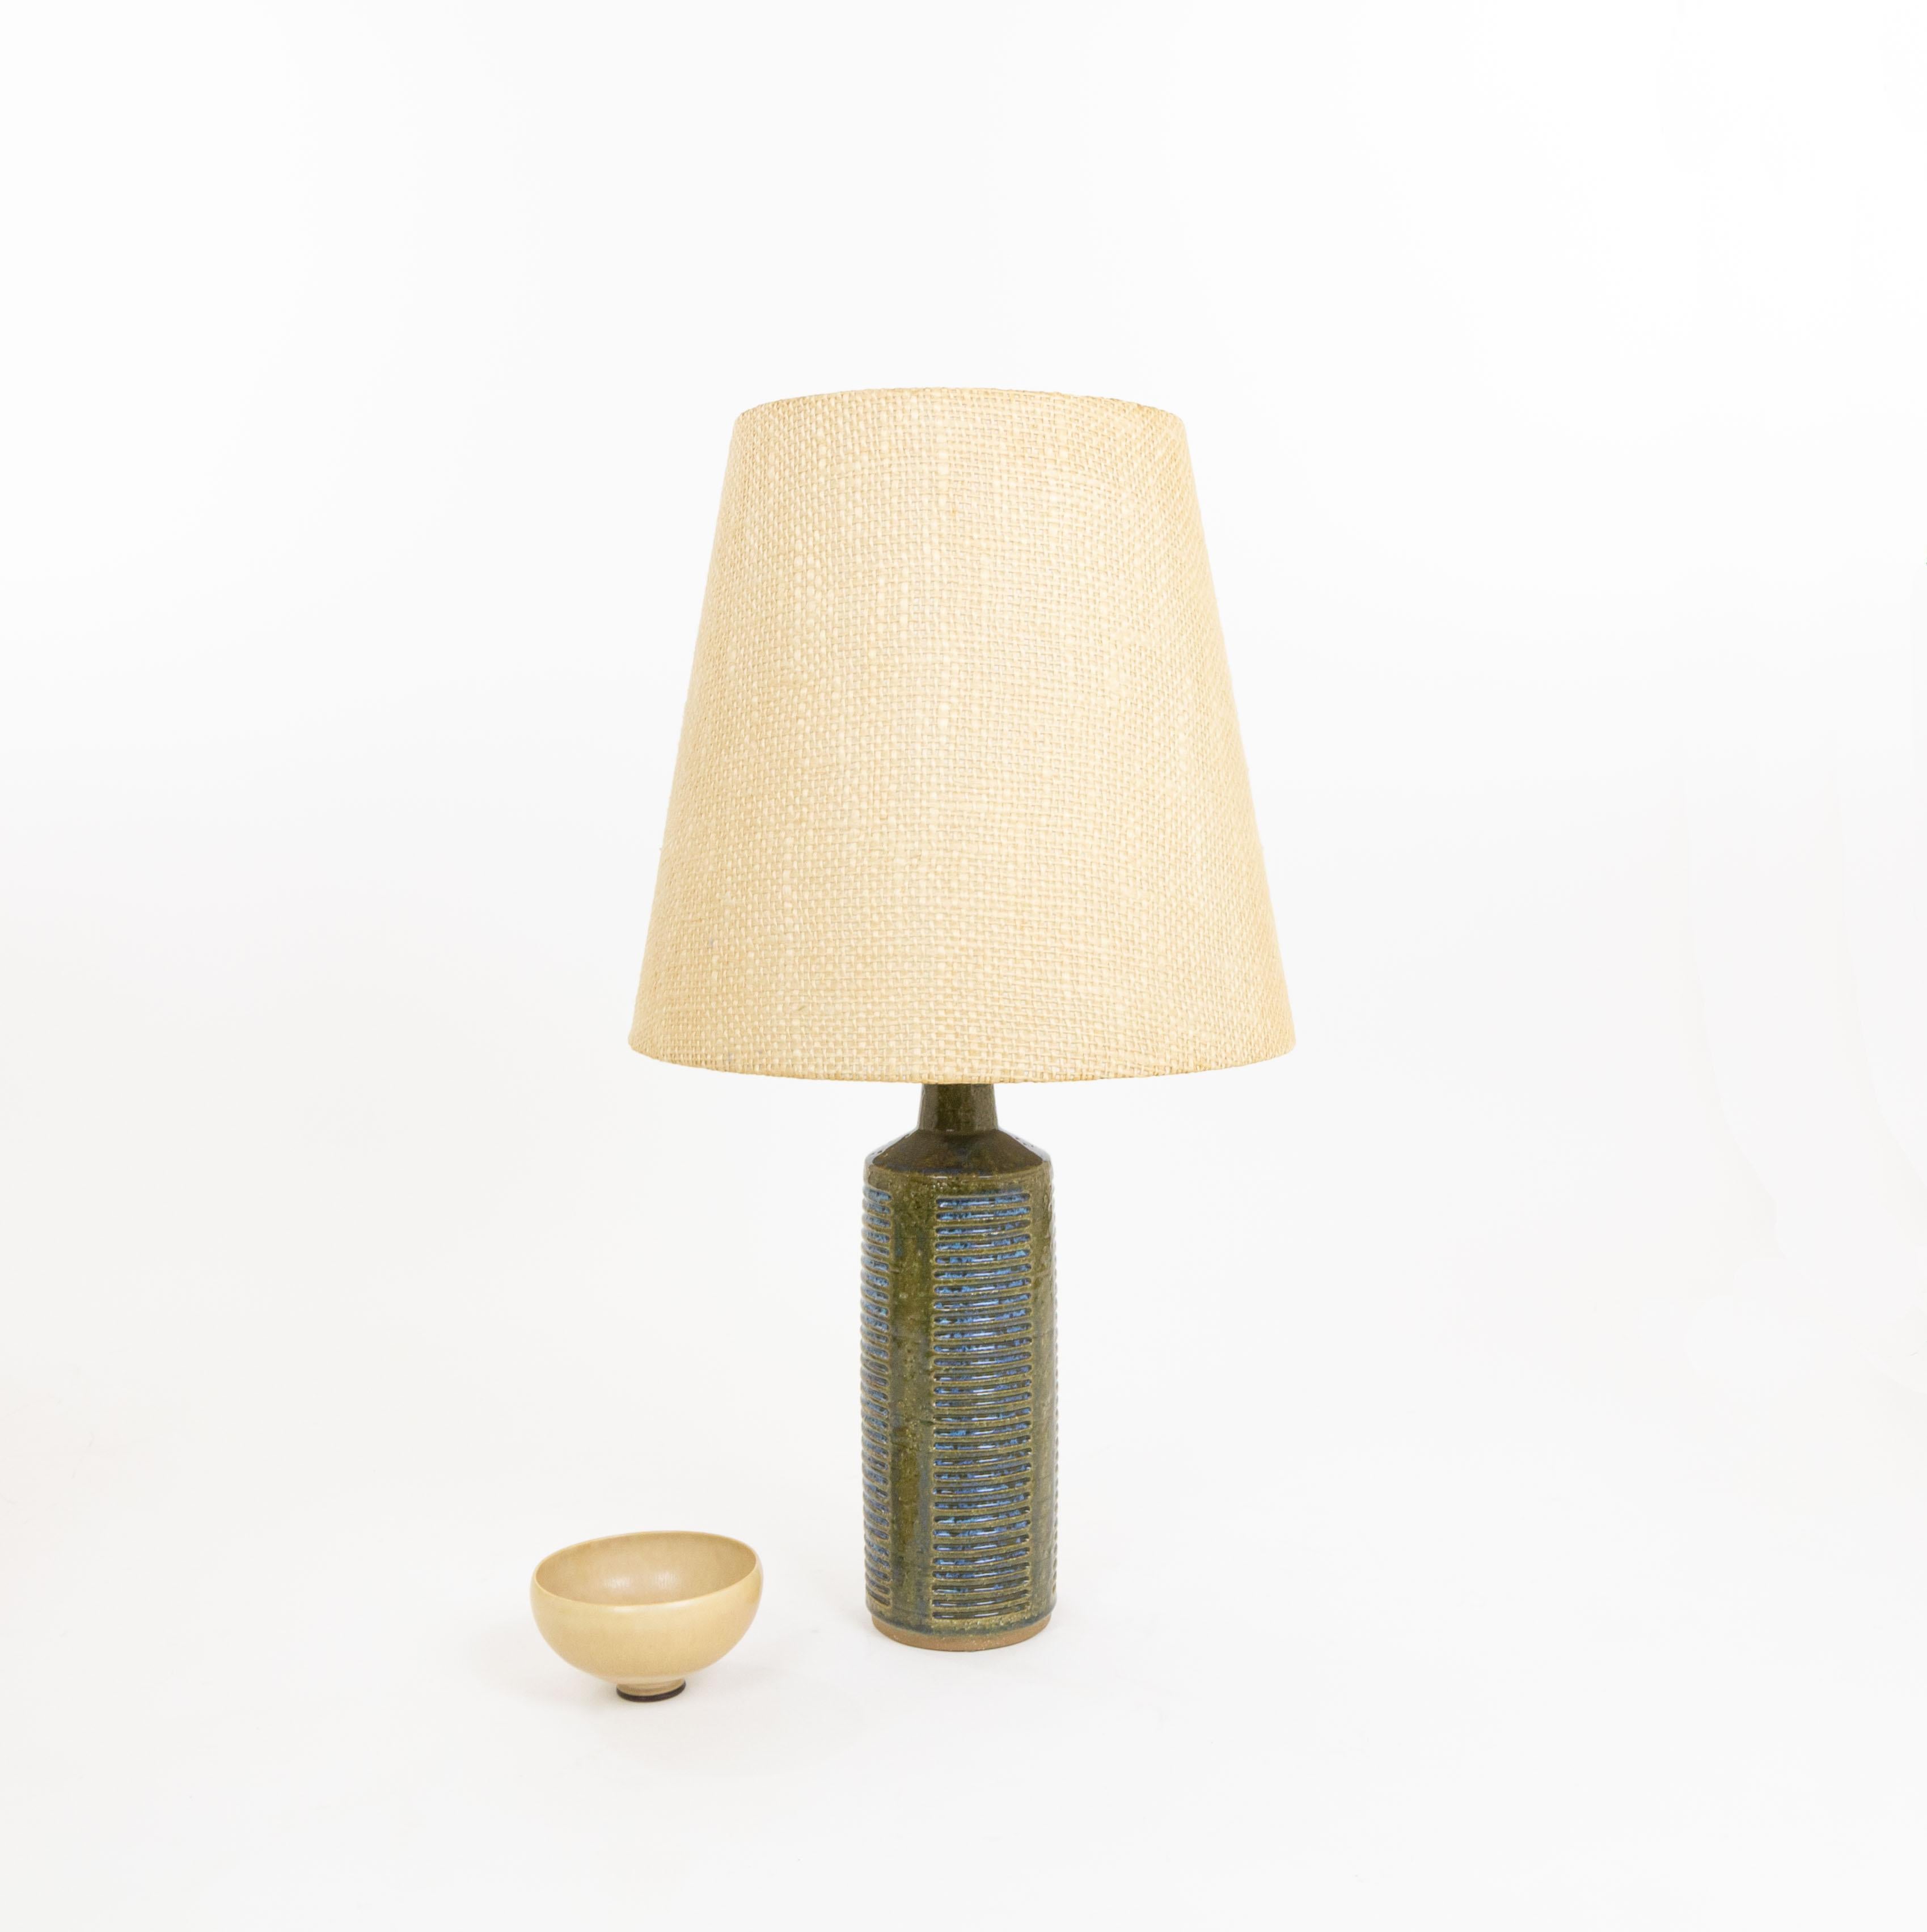 Glazed Olive Green and Blue DL/27 table lamp by Linnemann-Schmidt for Palshus, 1960s For Sale